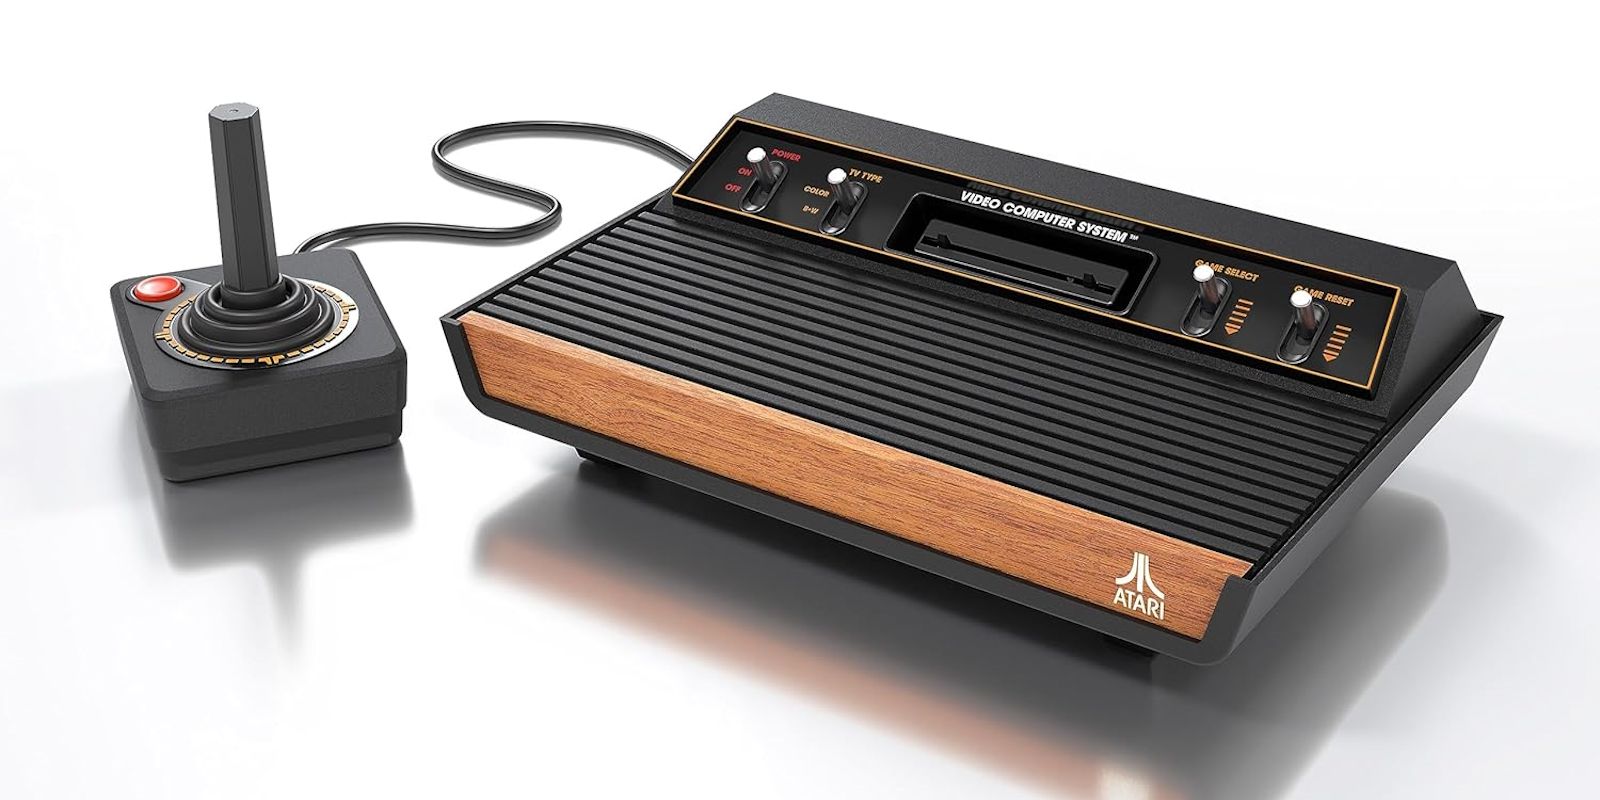 Atari 2600 Plus Promotional Image